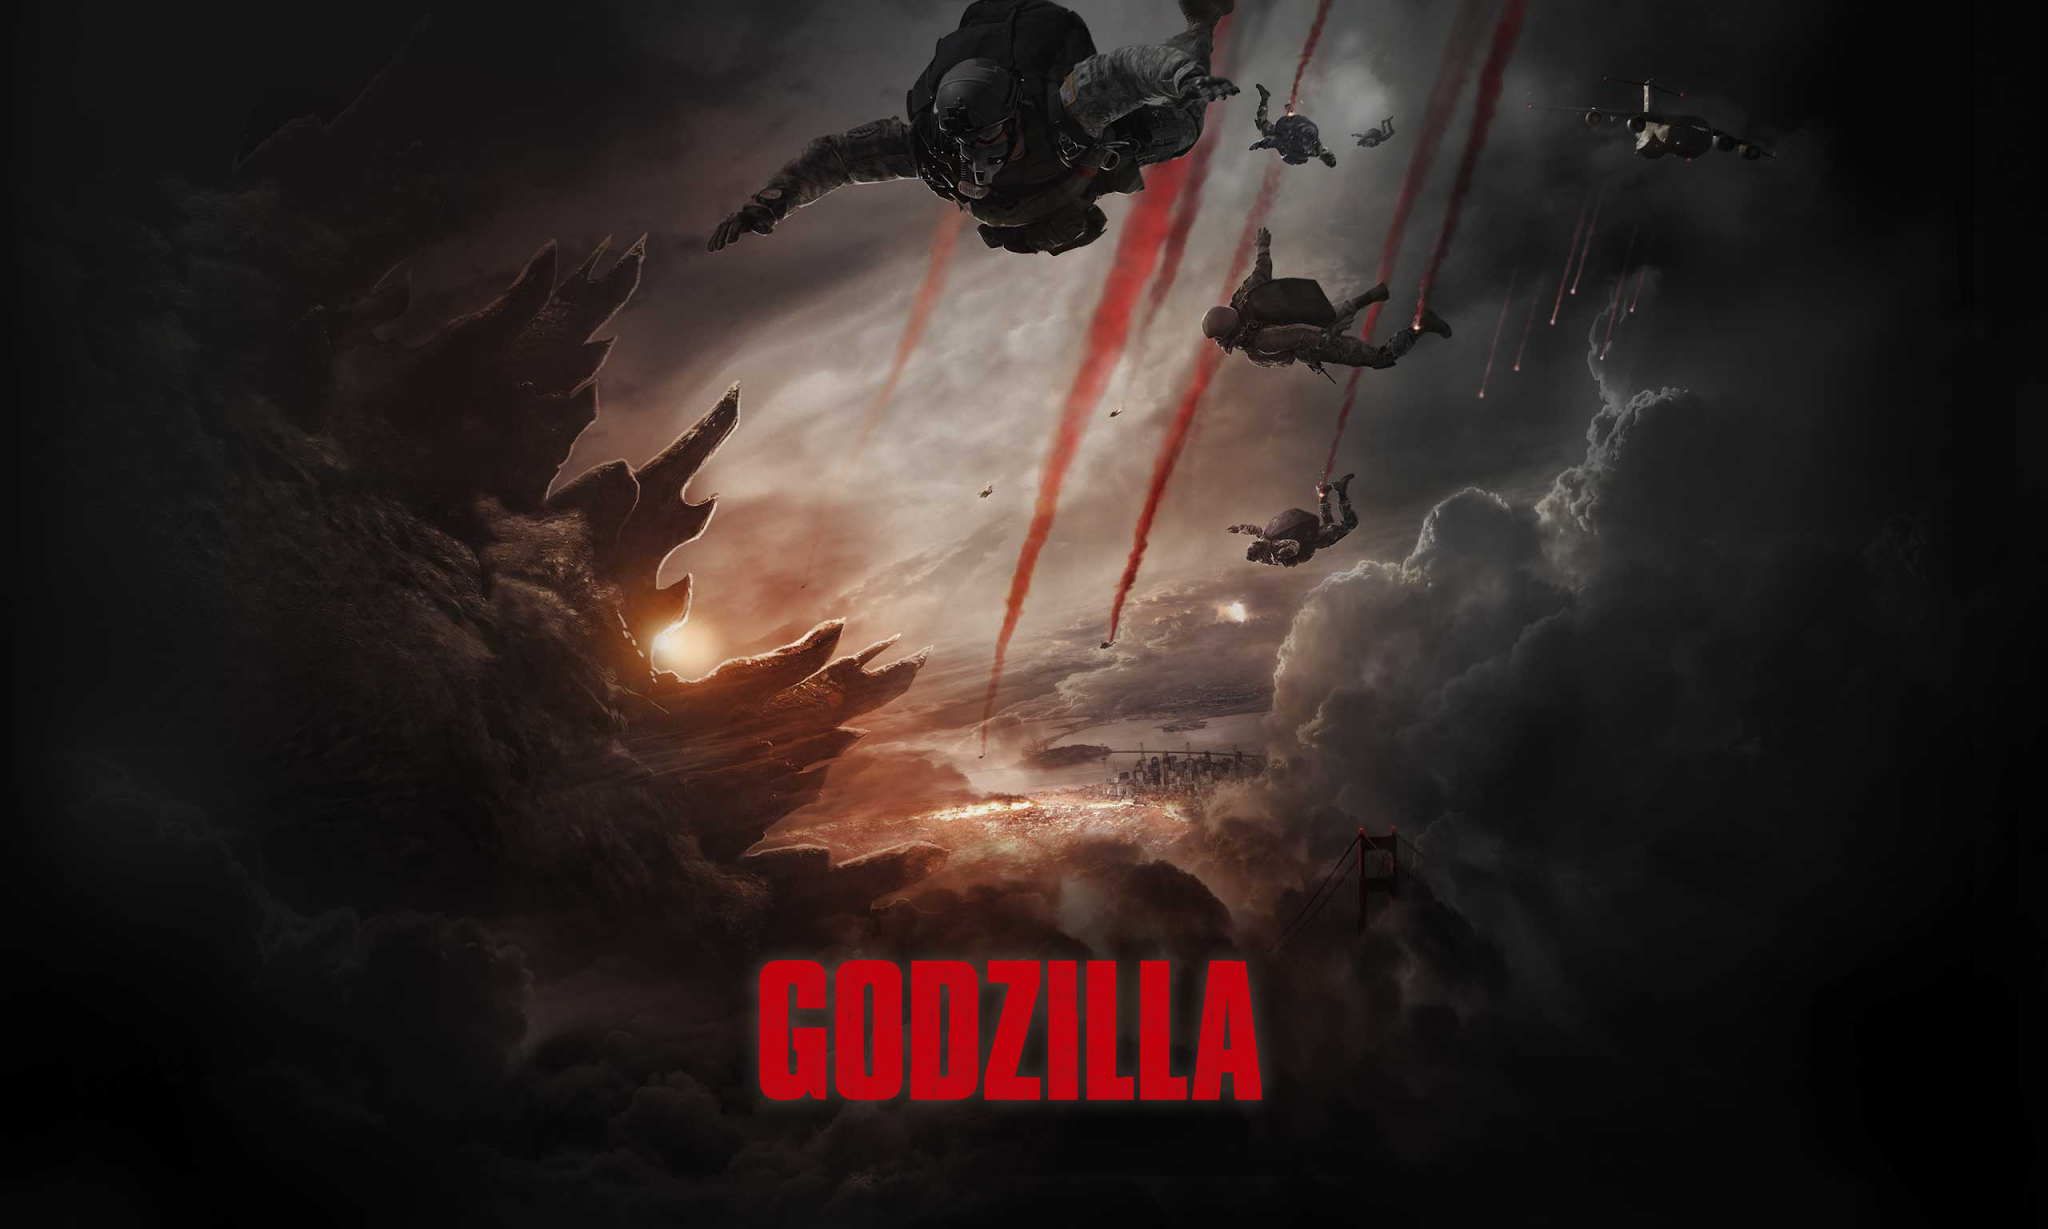 Across Godzilla Poster Wallpaper News